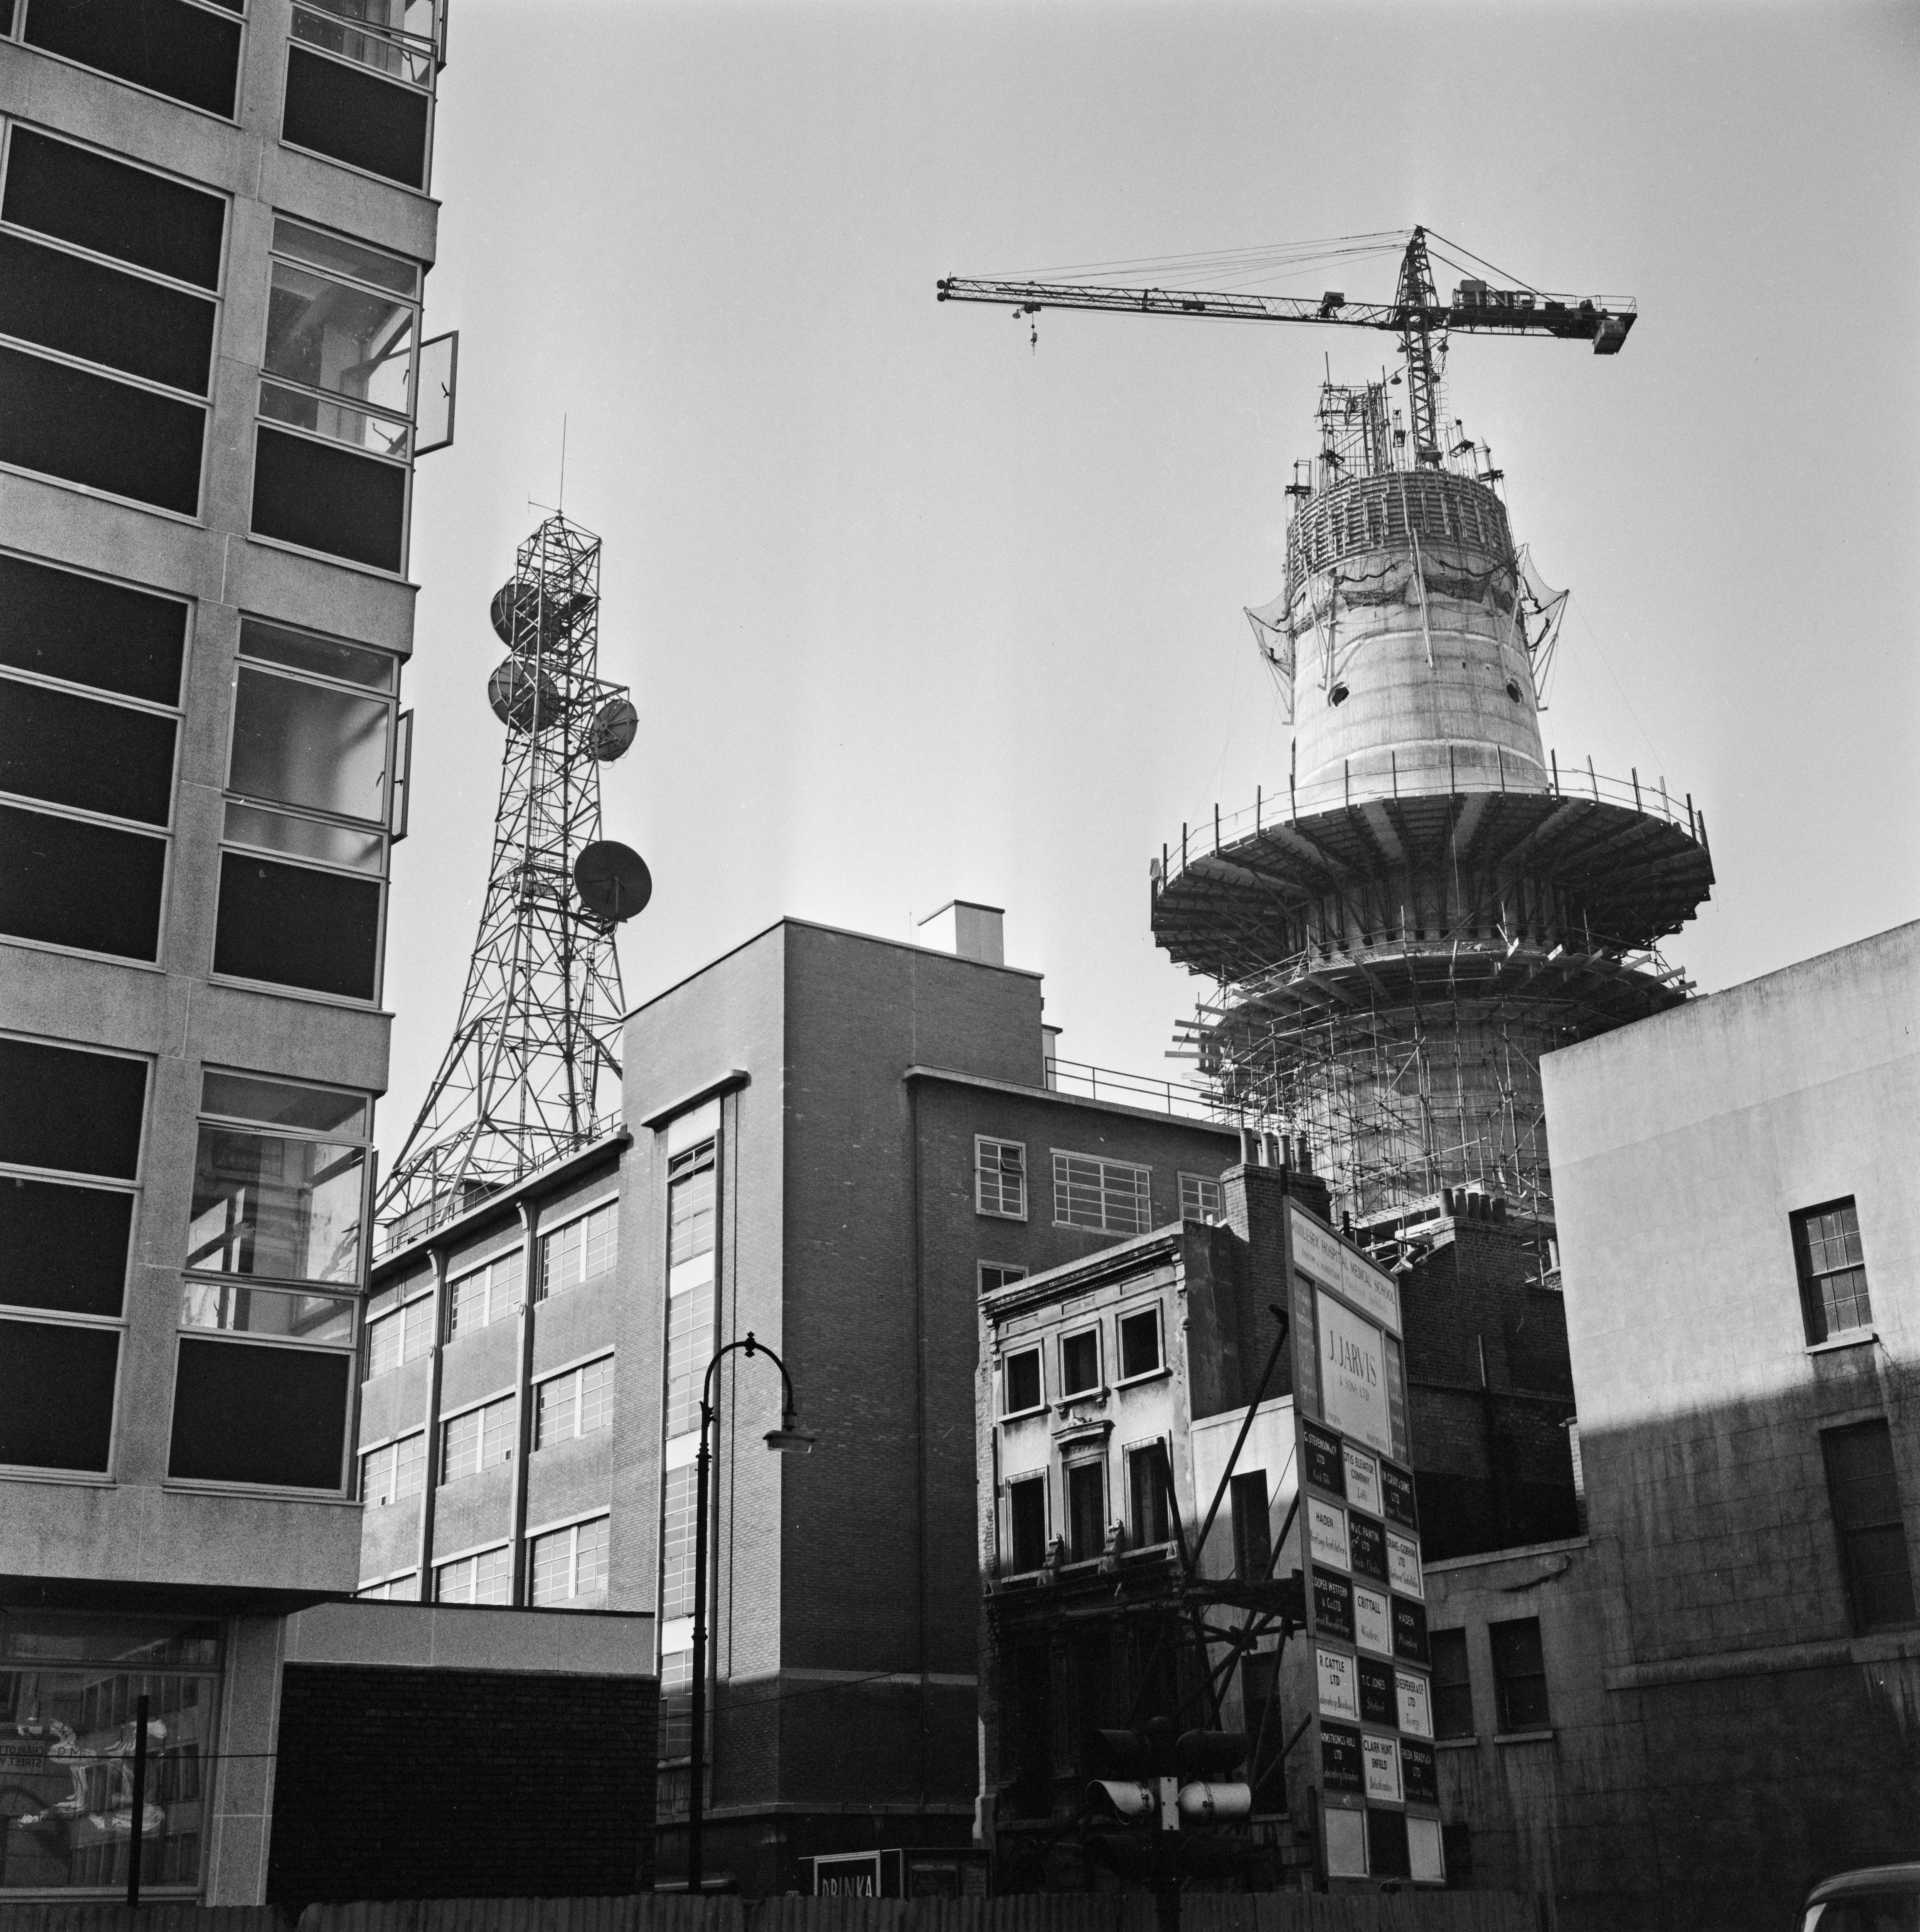 BT tower under construction